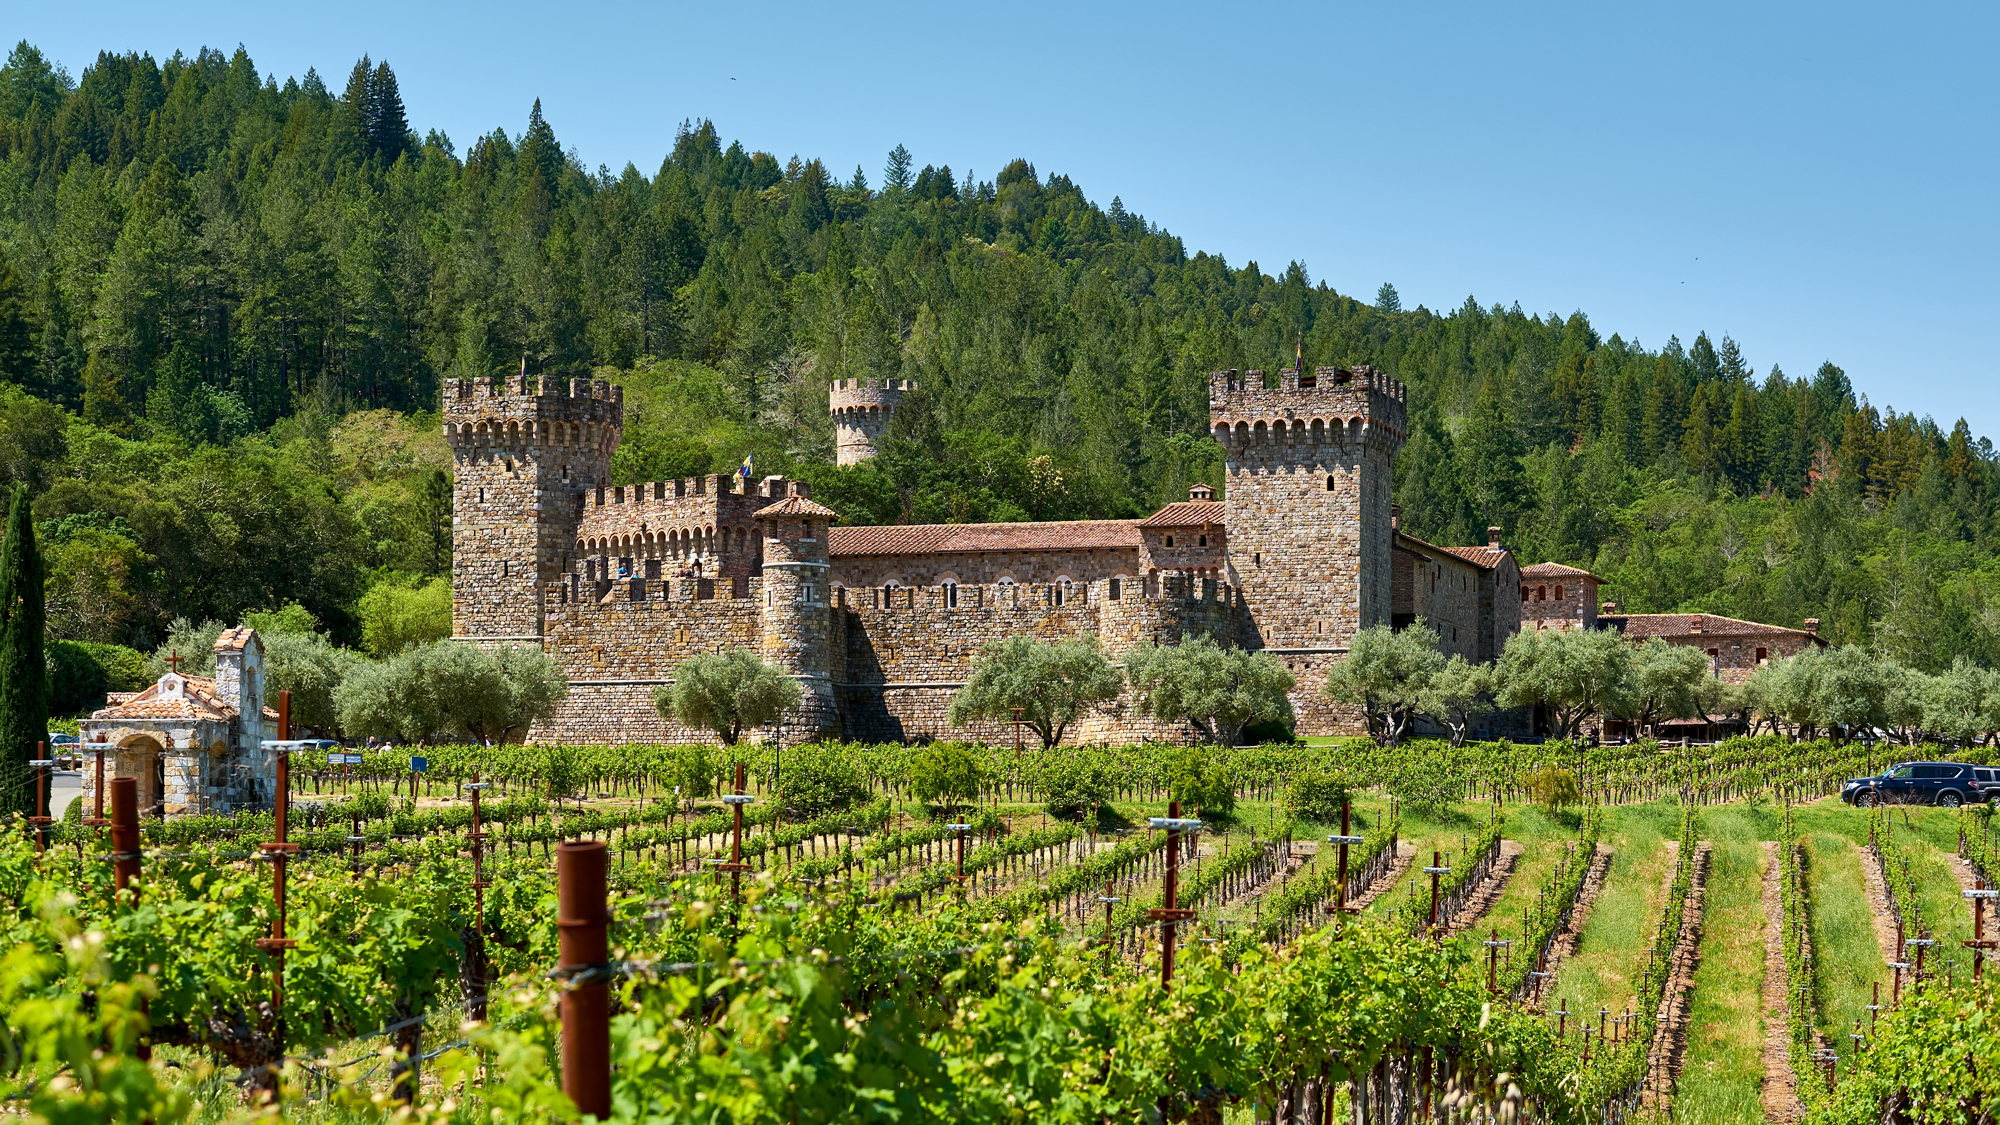 Vineyards in front of Castello di Amorosa in Napa Valley California